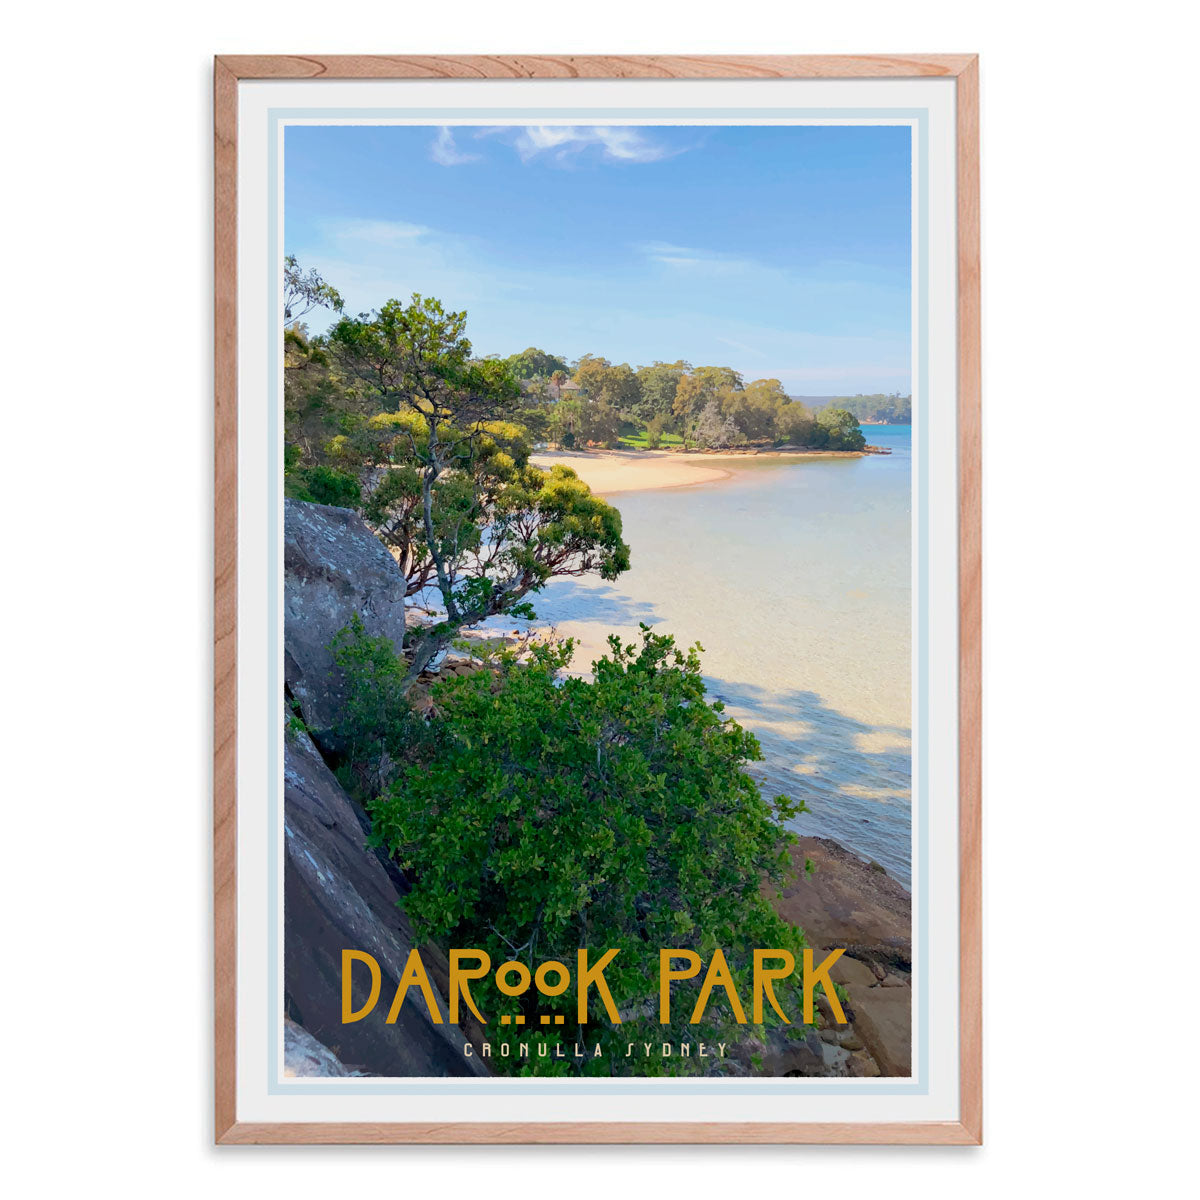 Darook Park Cronulla, vintage style travel oak framed print places we luv